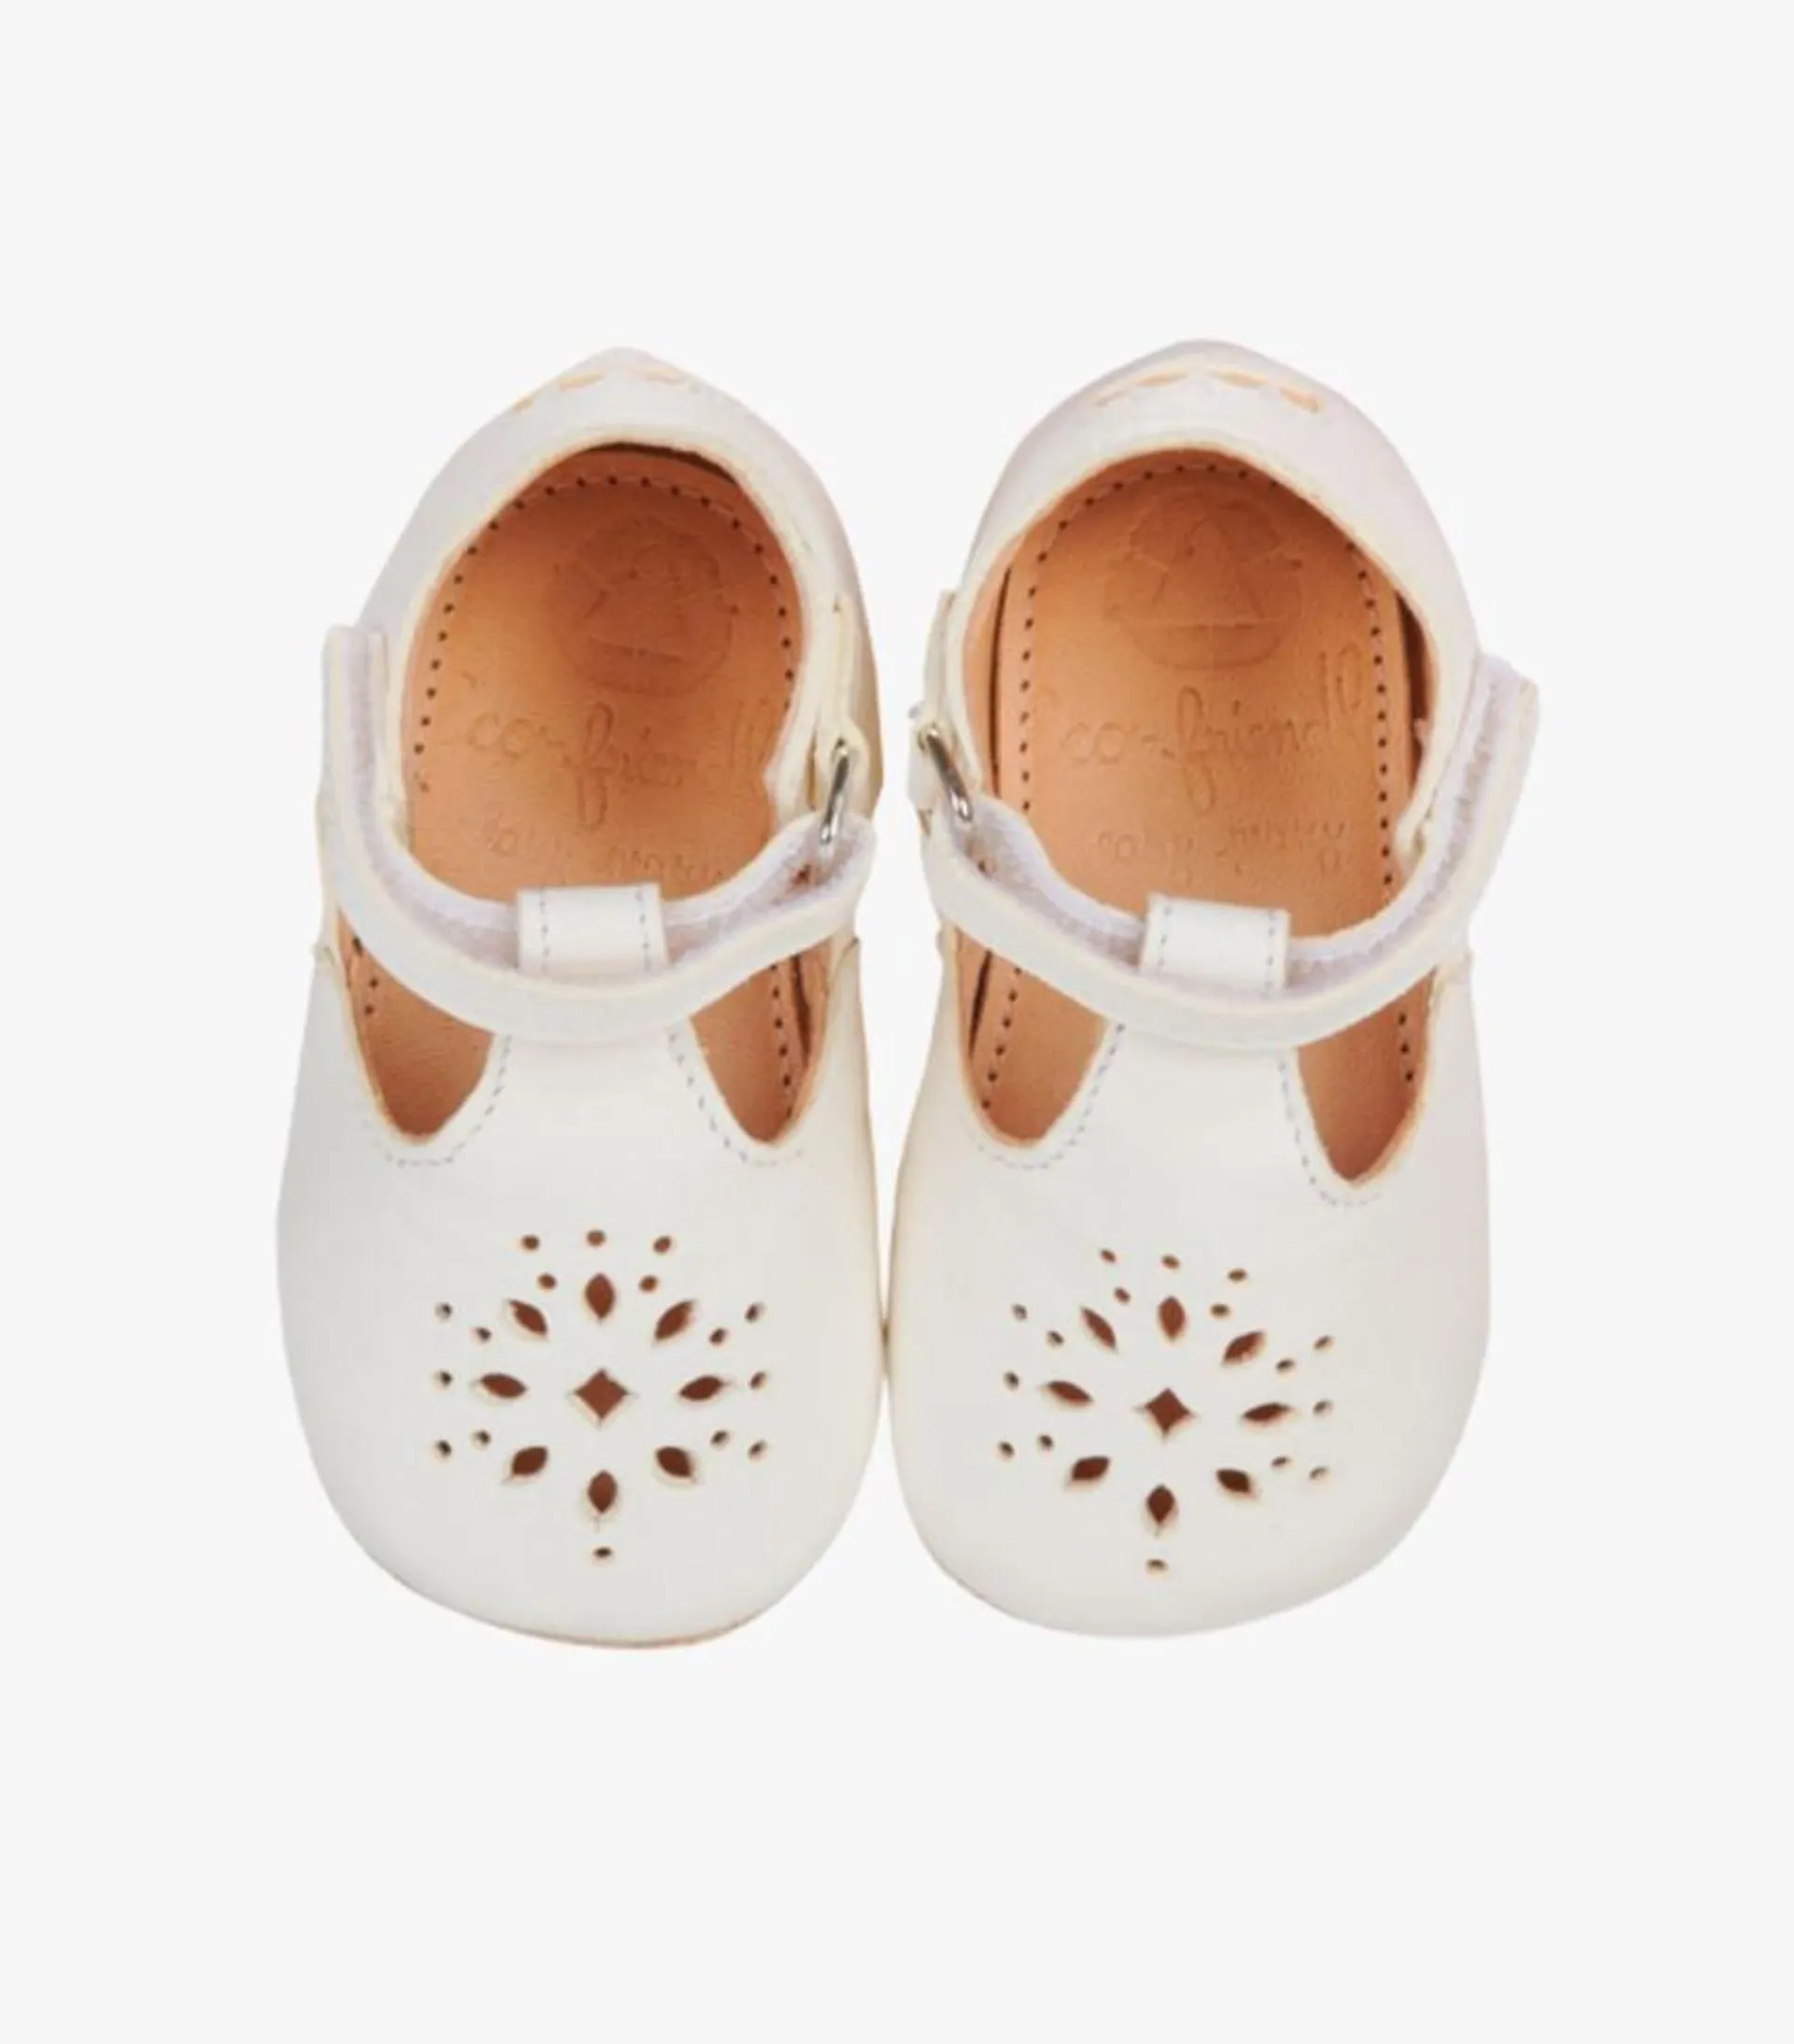 Chaussons blanc sandale